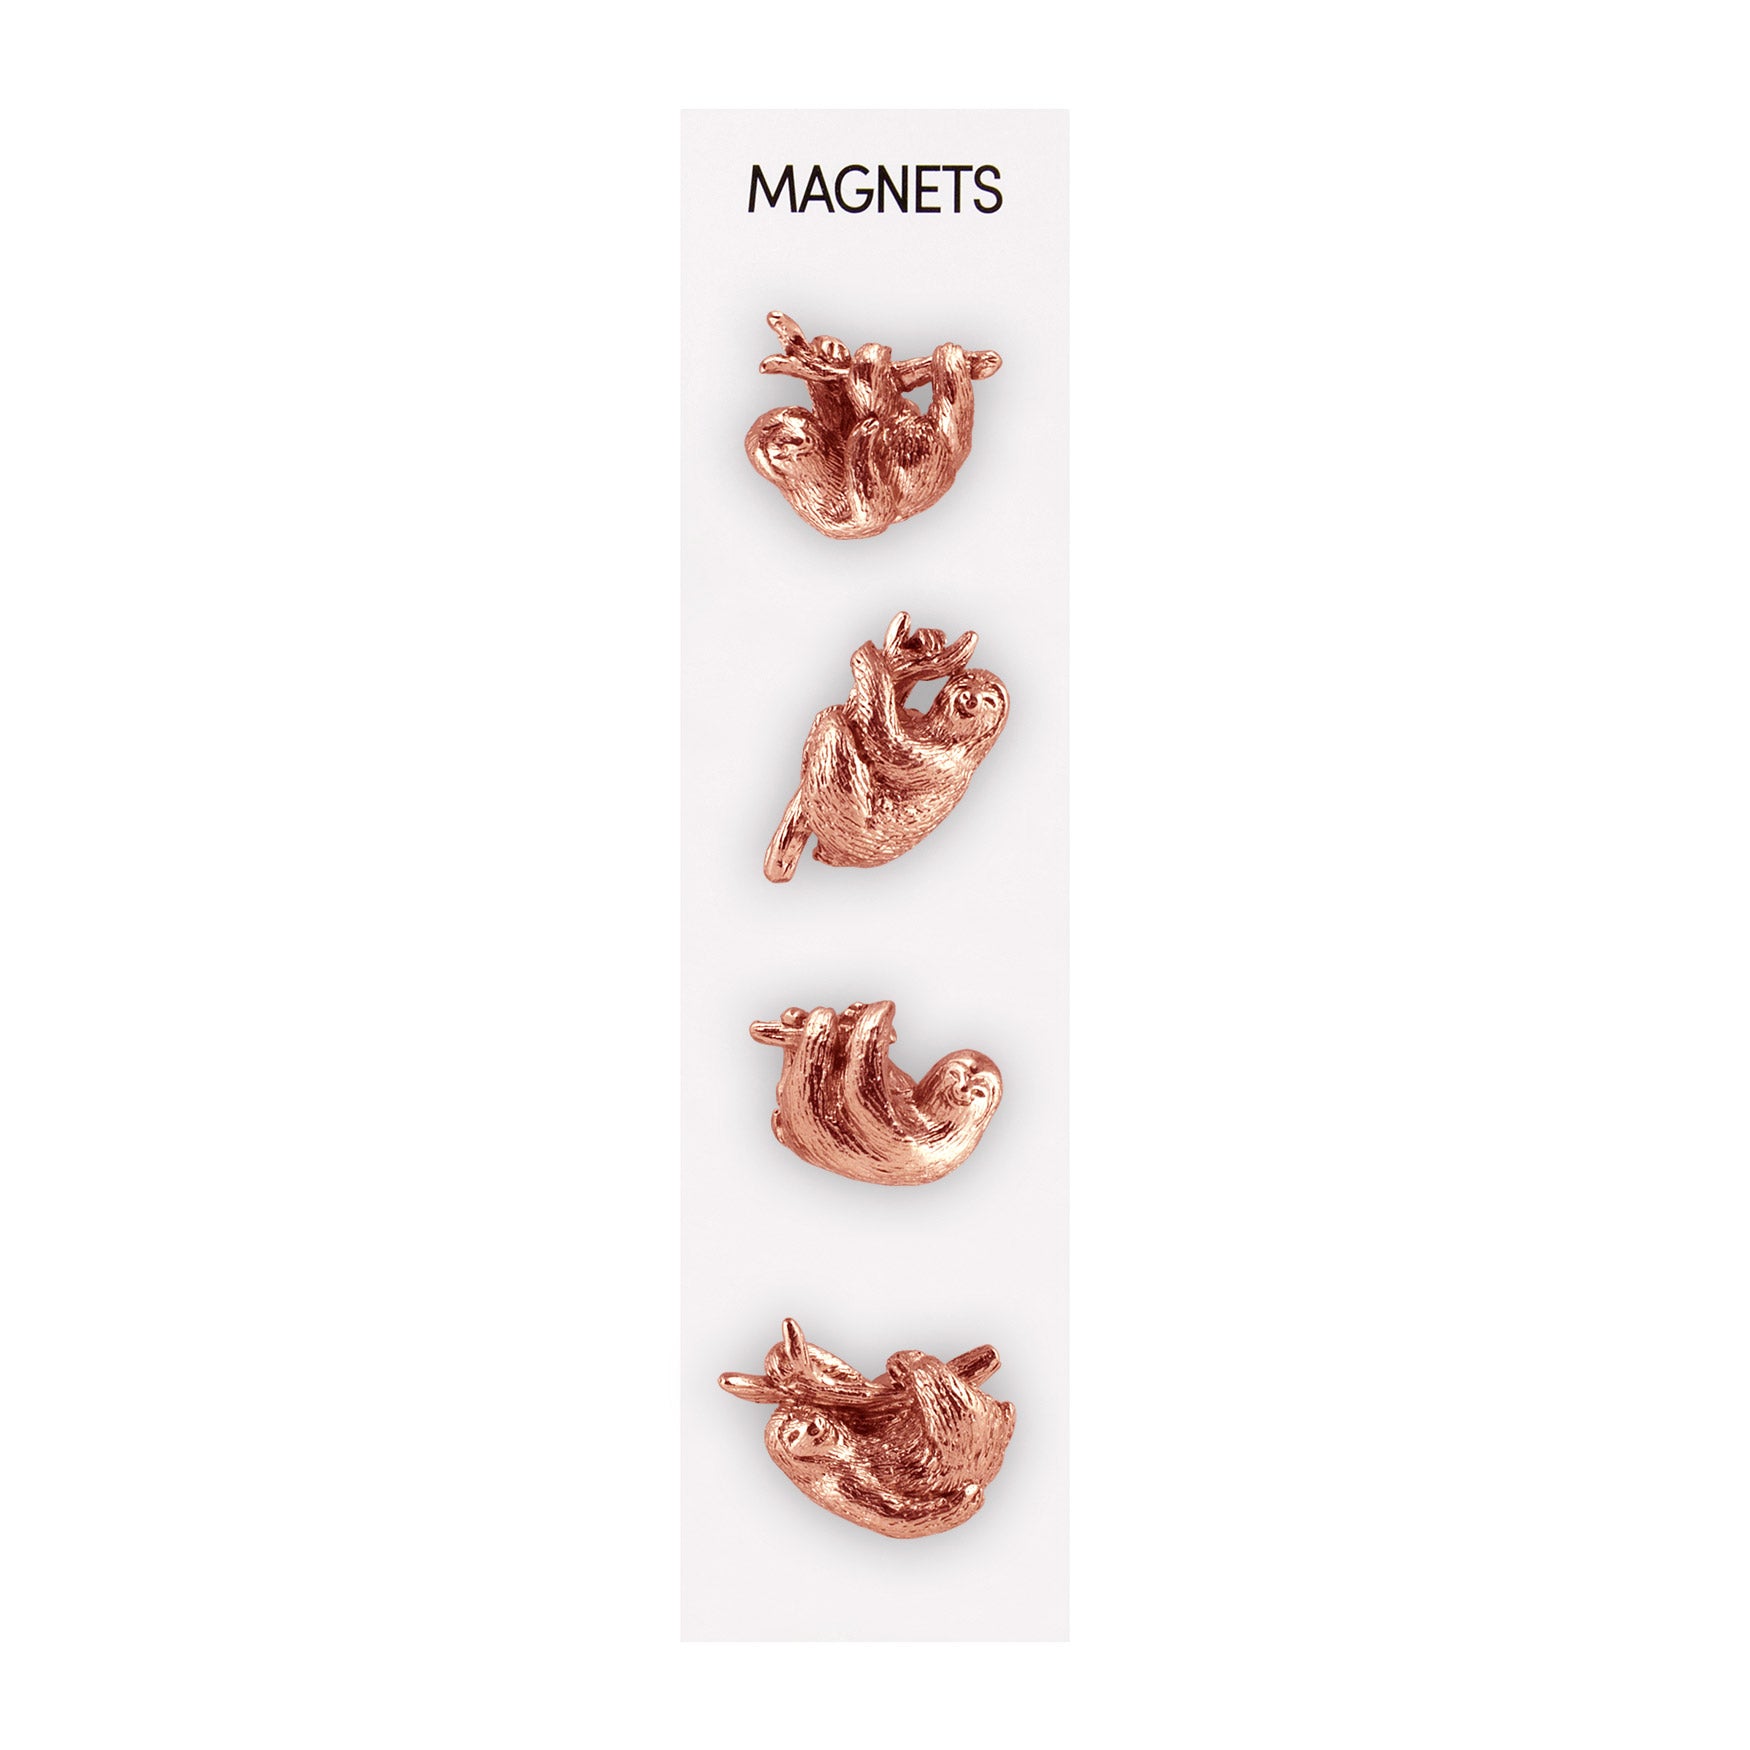 cast metal sloth magnets